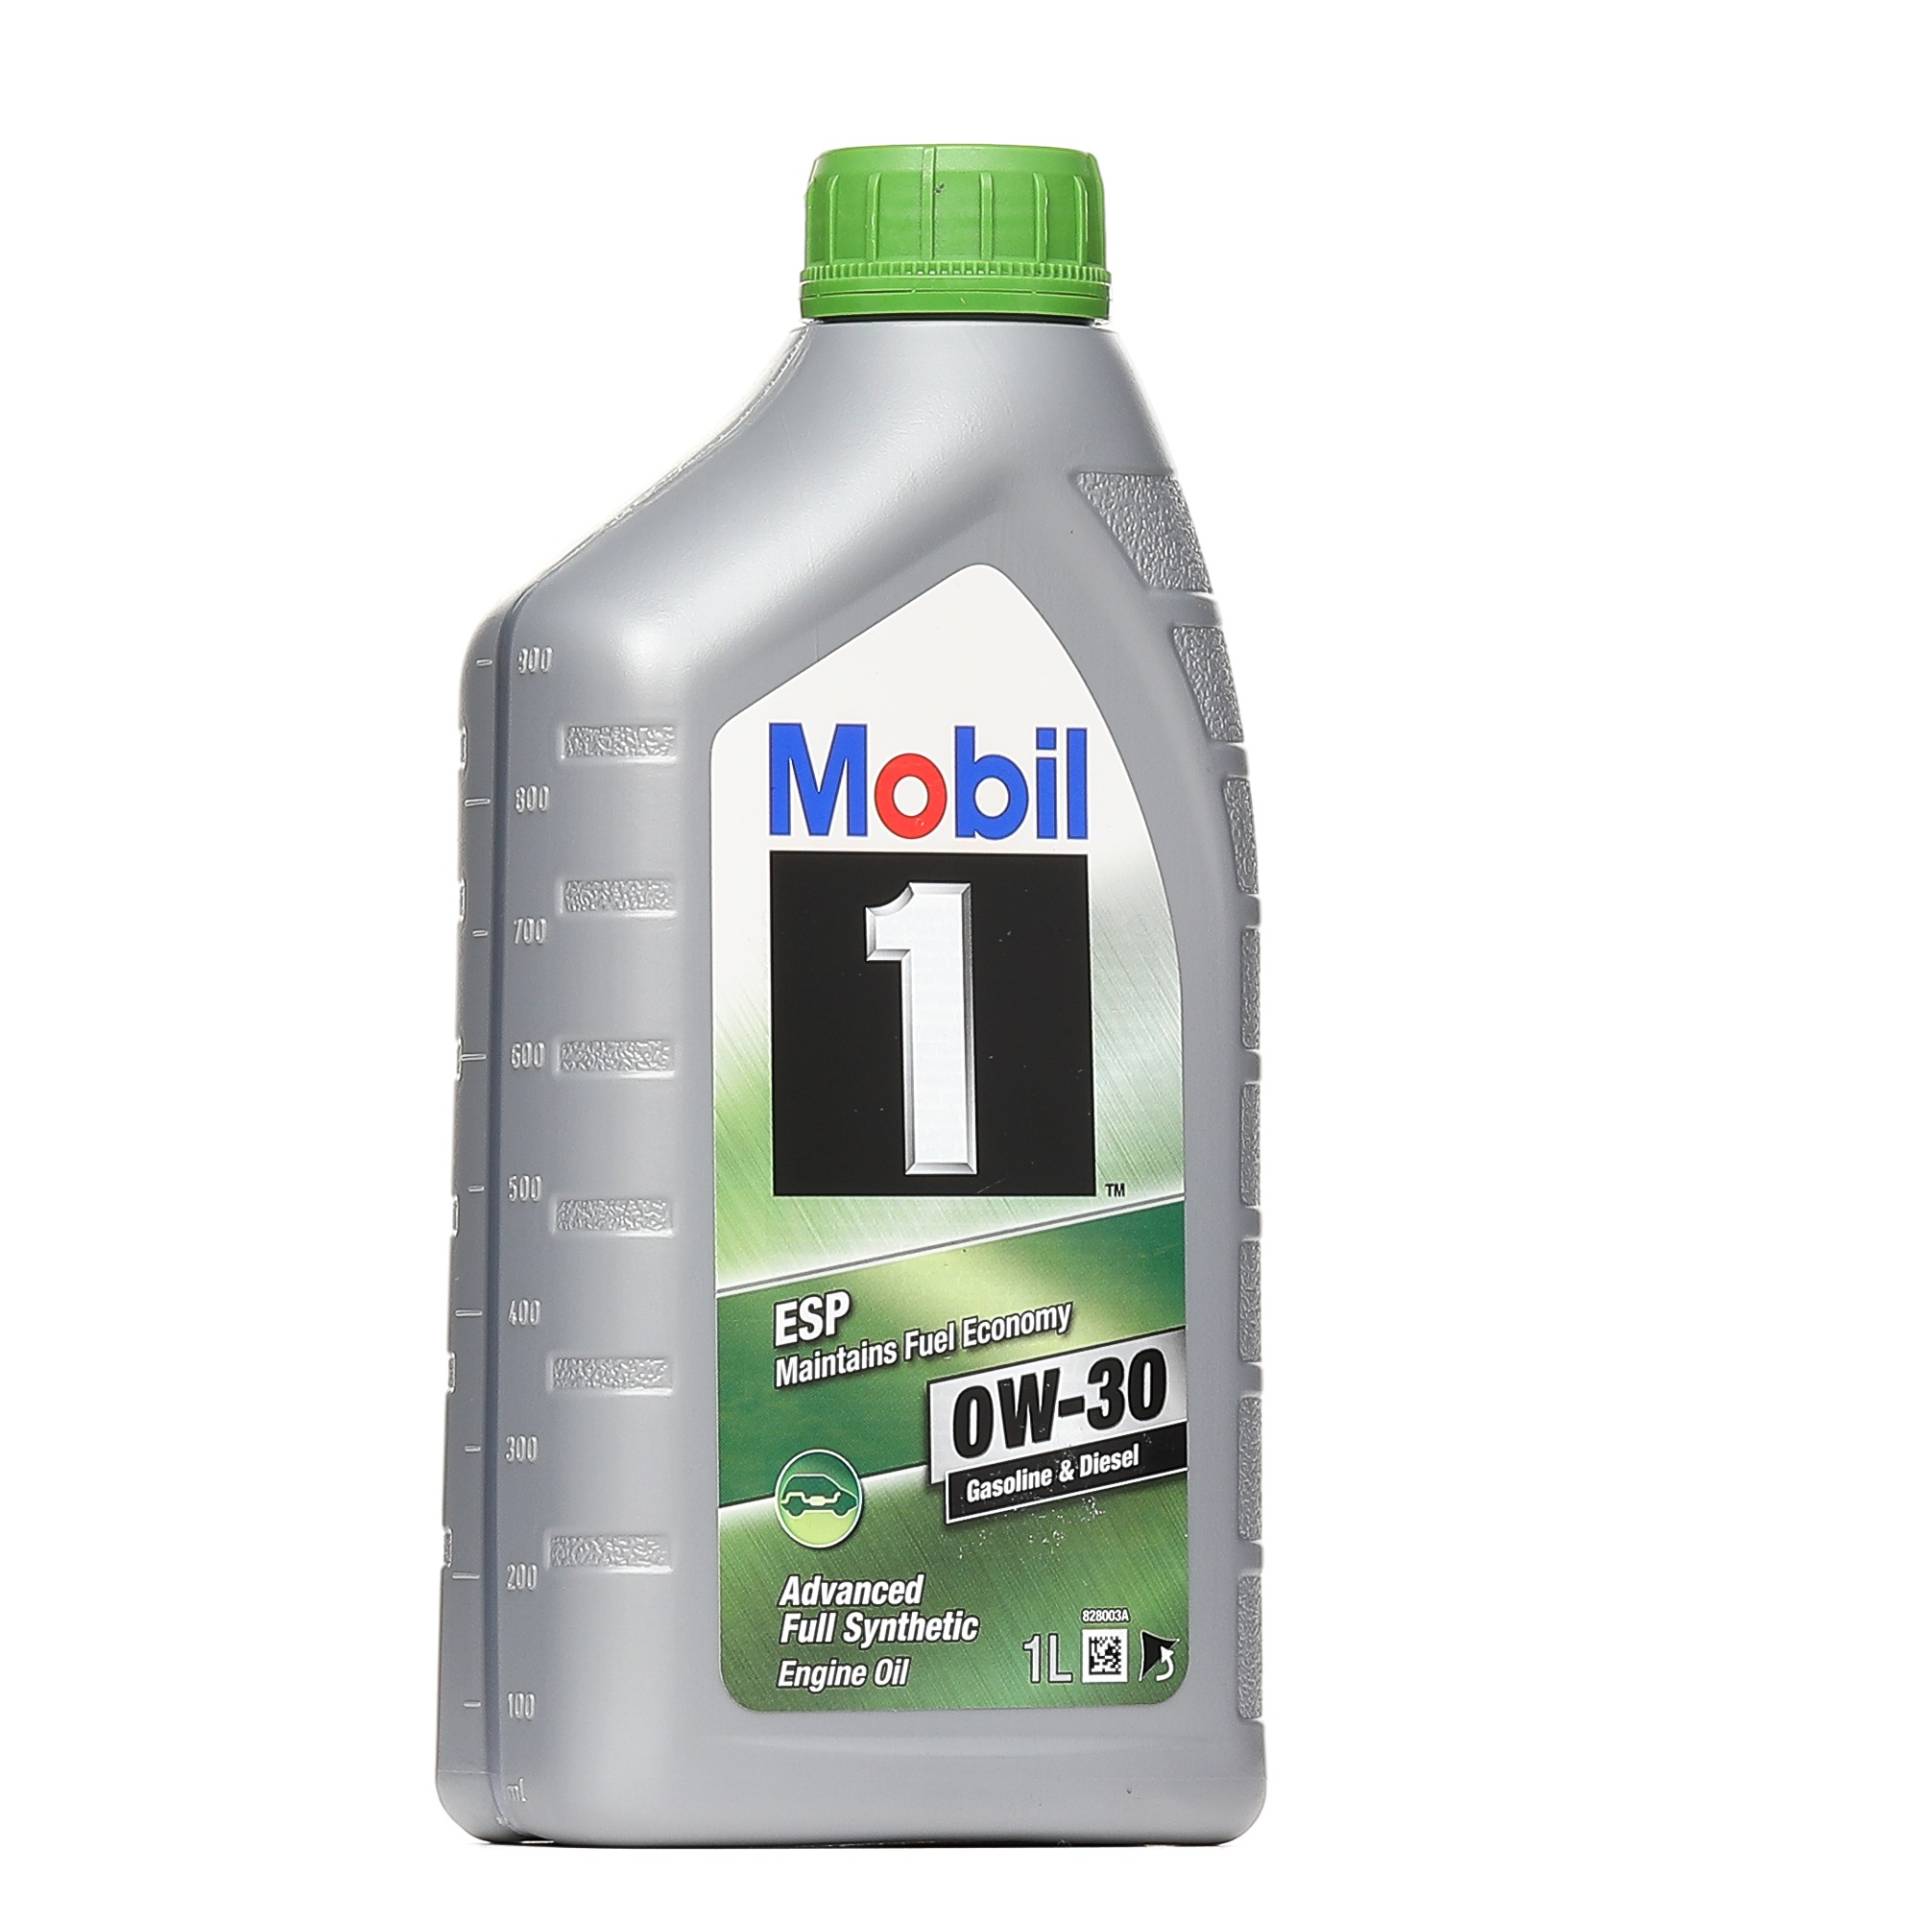 MOBIL Motoröl VW,AUDI,MERCEDES-BENZ 152312 2015101010K3 Motorenöl,Öl,Öl für Motor von MOBIL